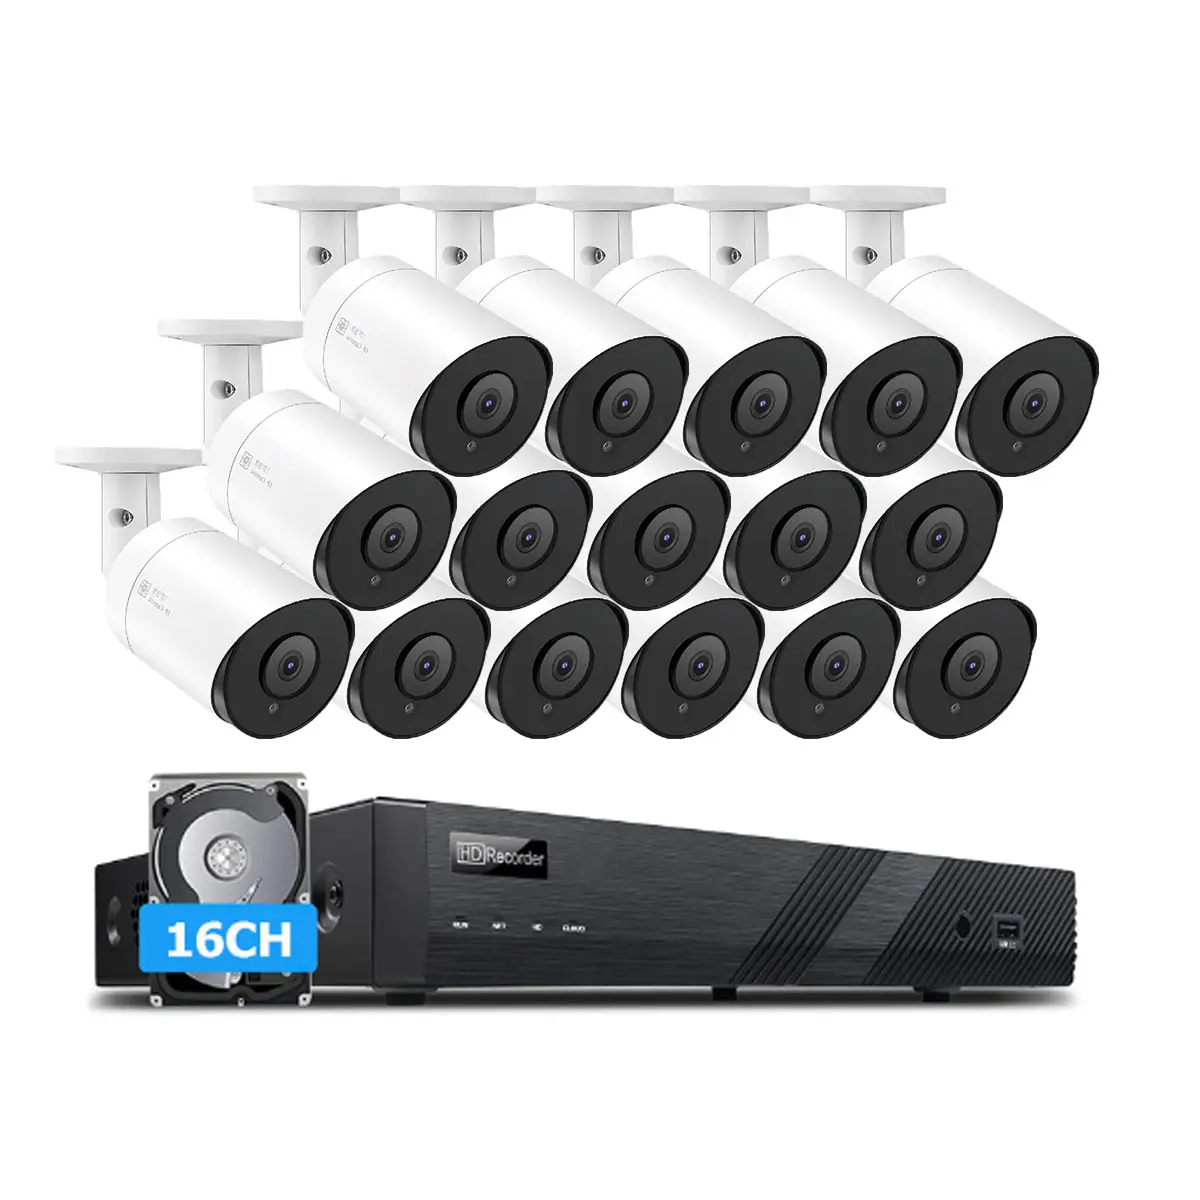 nvr security system 16ch poe surveillance cameras kit poe ip cameras 5 mp bullet outdoor audio night vision